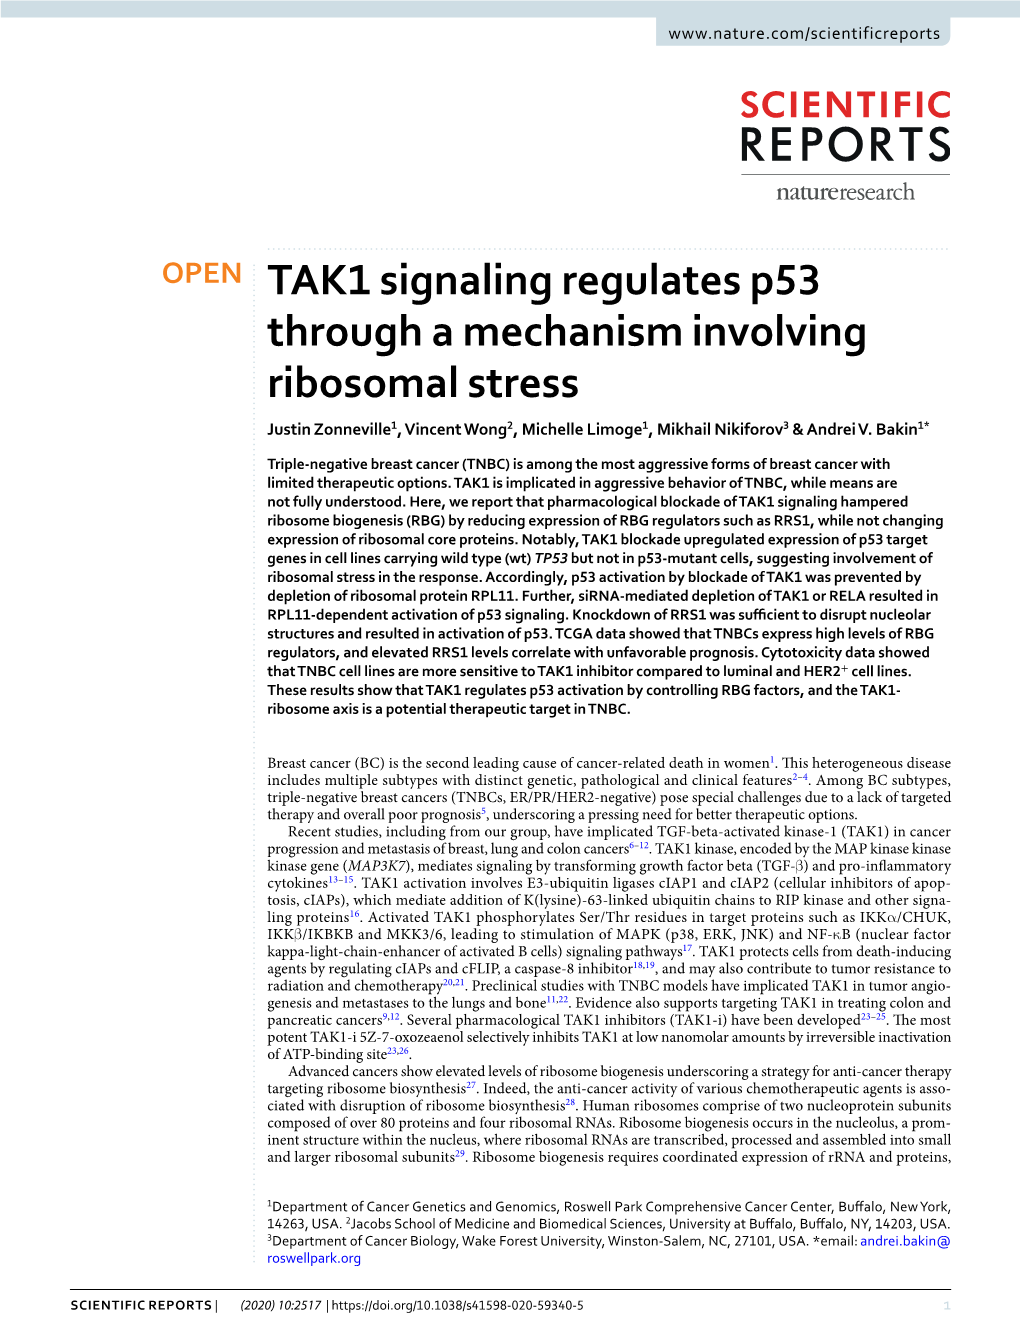 TAK1 Signaling Regulates P53 Through a Mechanism Involving Ribosomal Stress Justin Zonneville1, Vincent Wong2, Michelle Limoge1, Mikhail Nikiforov3 & Andrei V